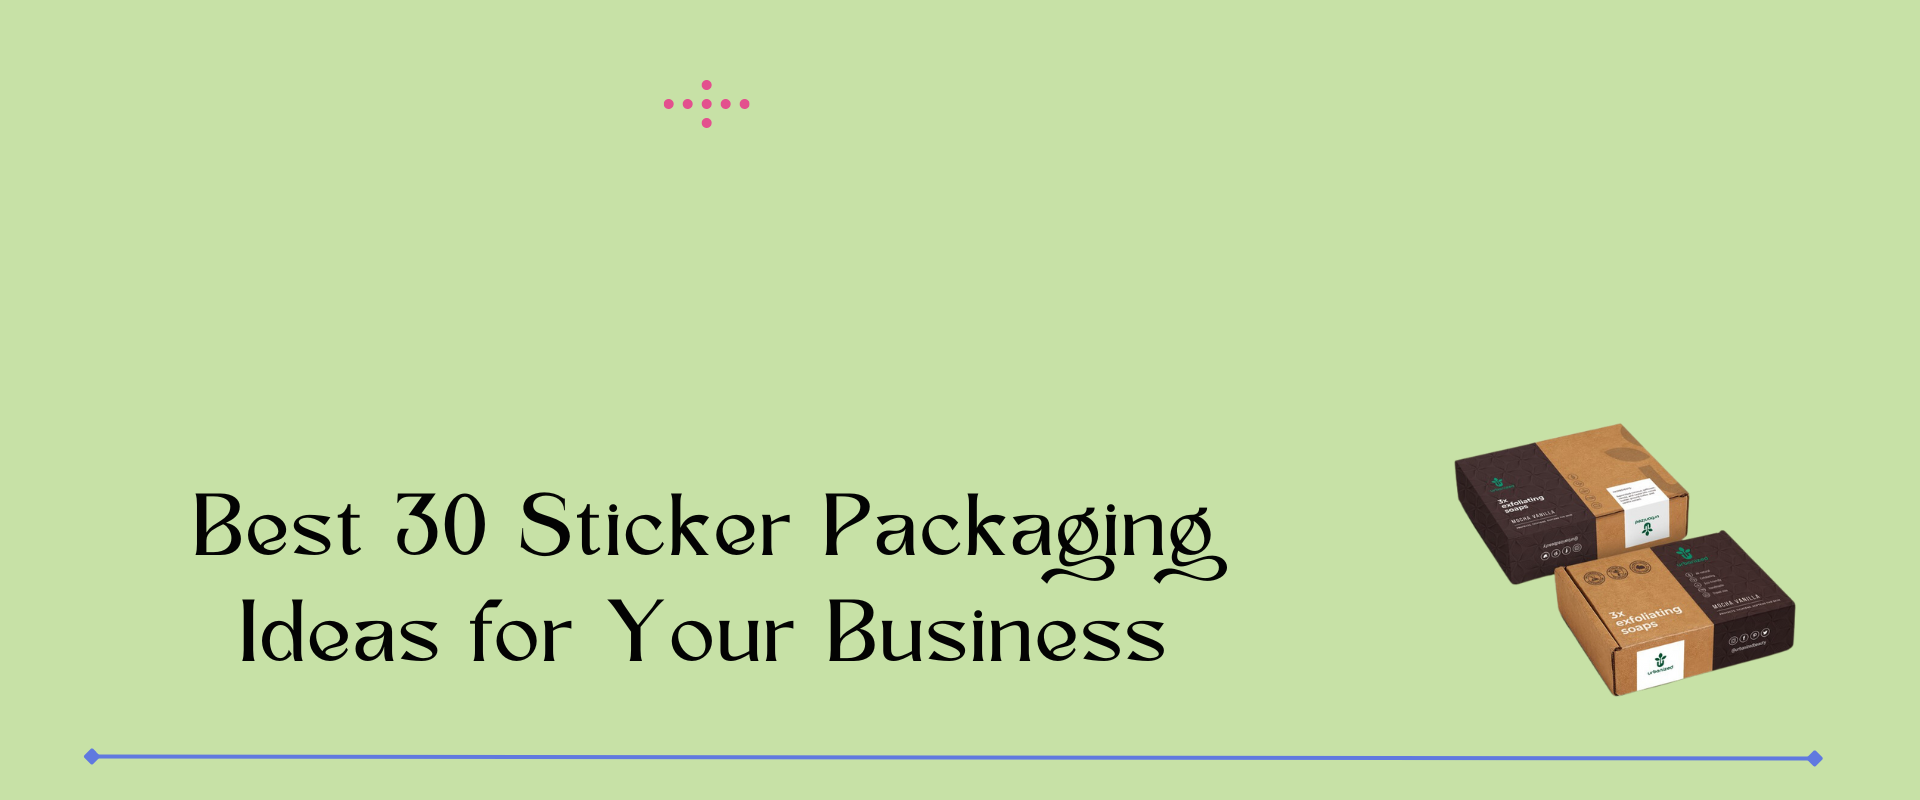 sticker packaging ideas